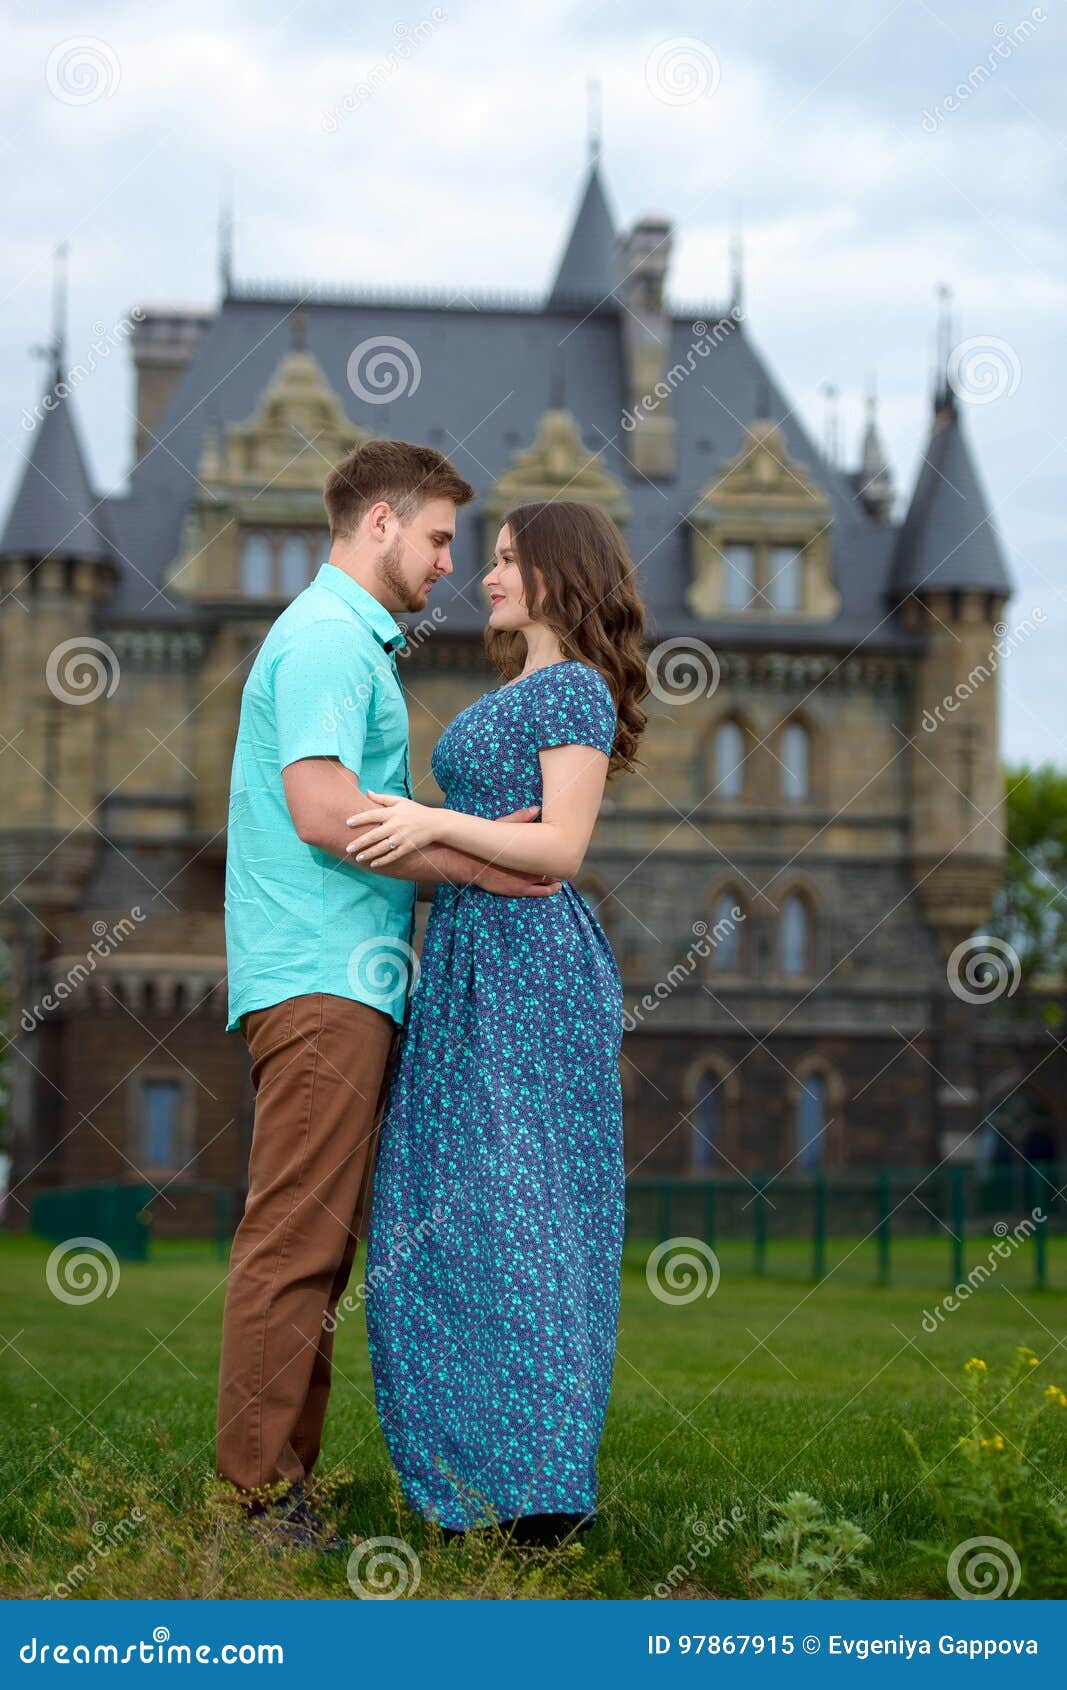 https://thumbs.dreamstime.com/z/young-loving-couple-man-woman-walking-near-castle-honeymoon-young-loving-couple-men-women-walking-near-97867915.jpg